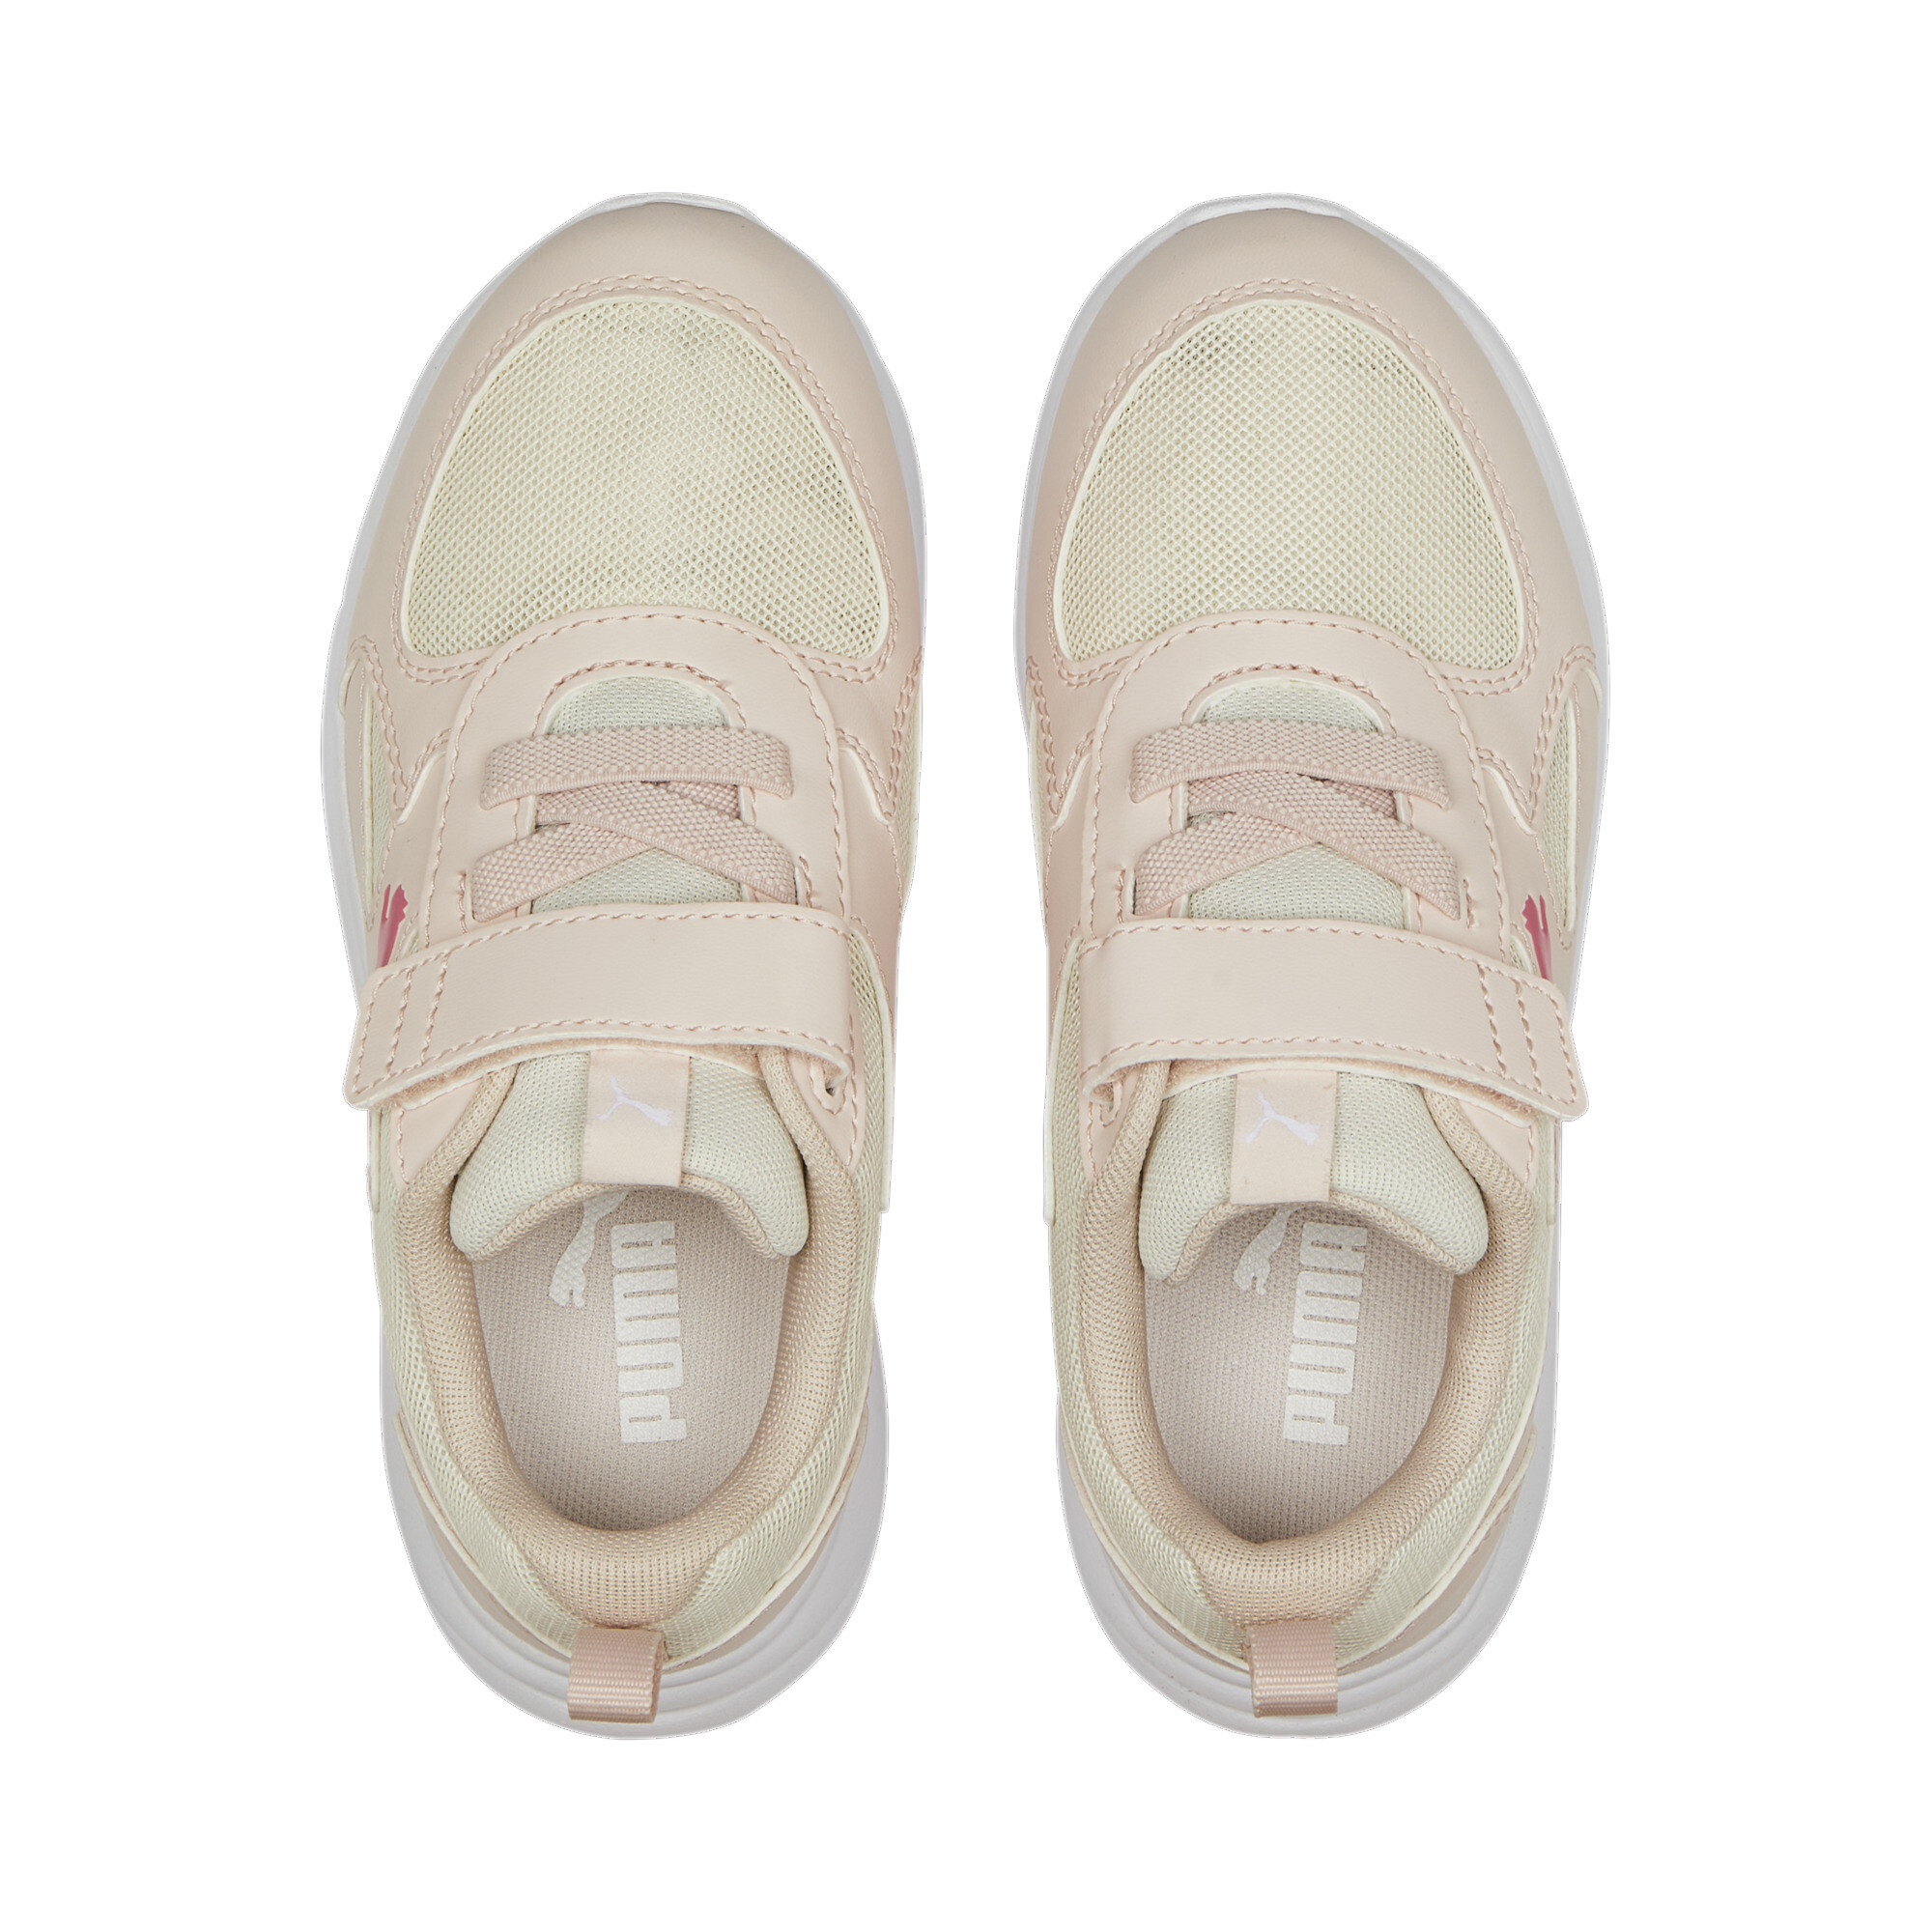 Kids' PUMA Fun Racer Sneakers In White/Pink, Size EU 28.5